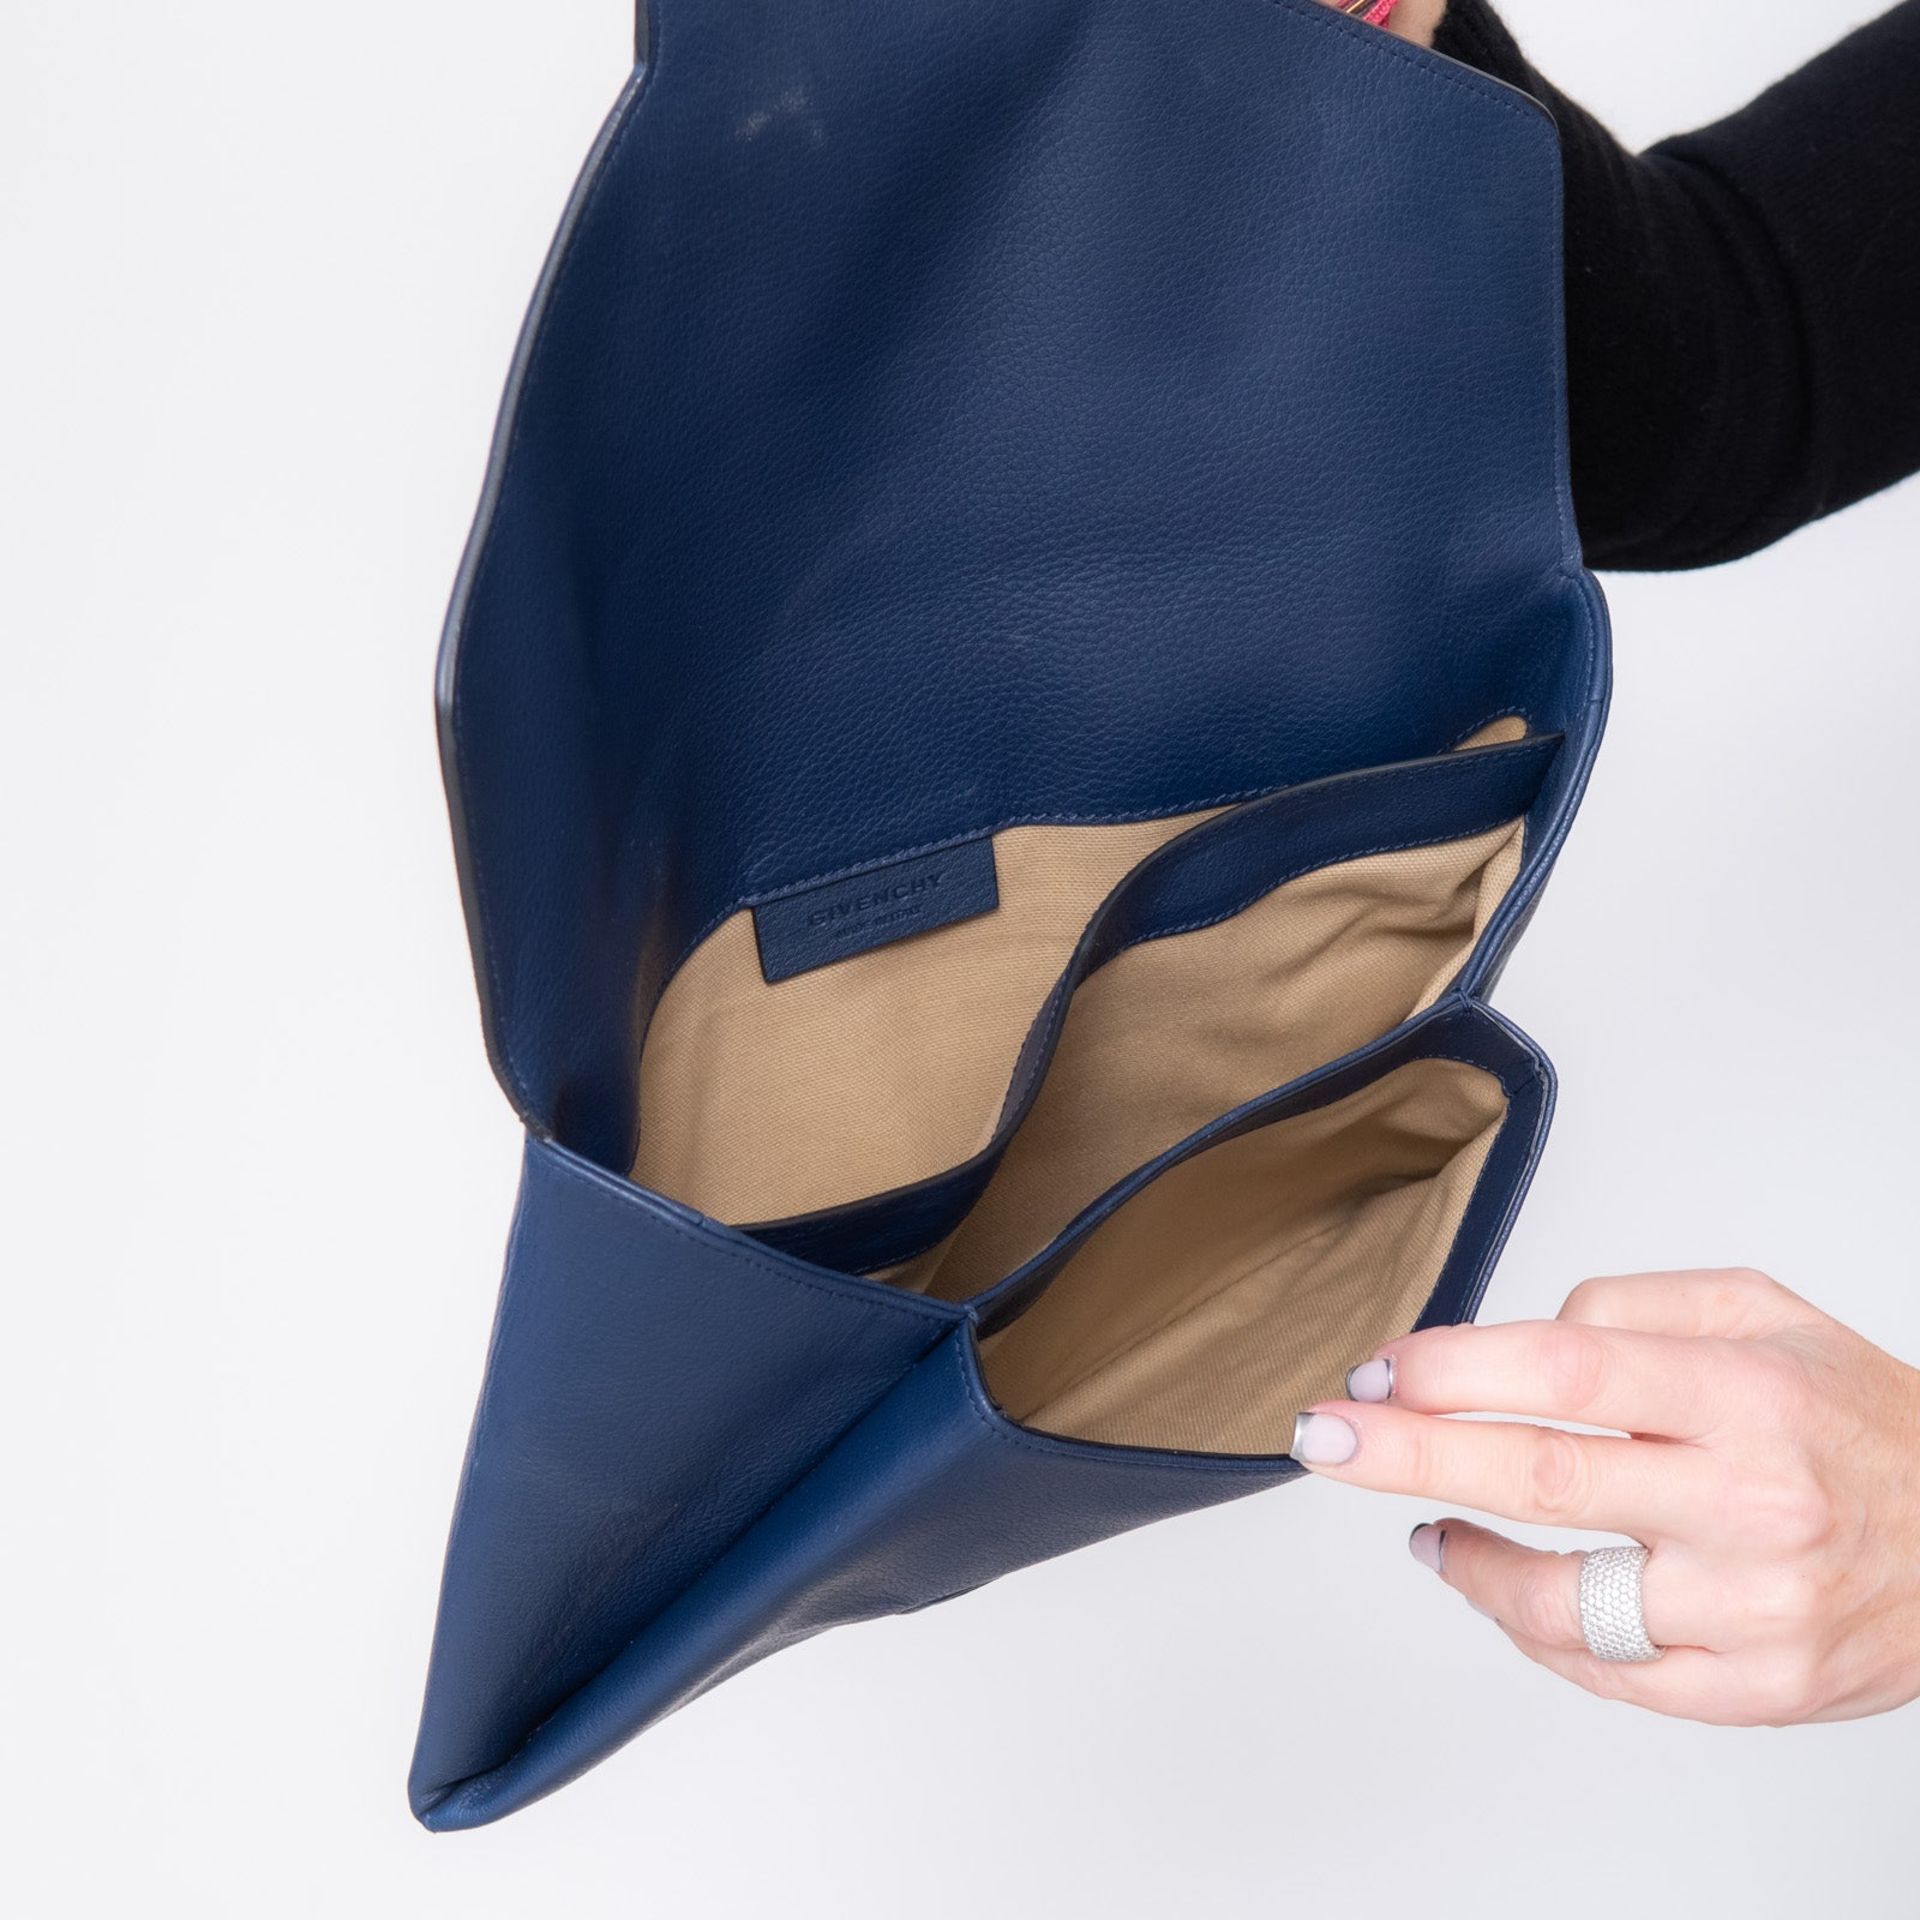 Givenchy Blue Leather Envelope Flap Bag - Image 6 of 6